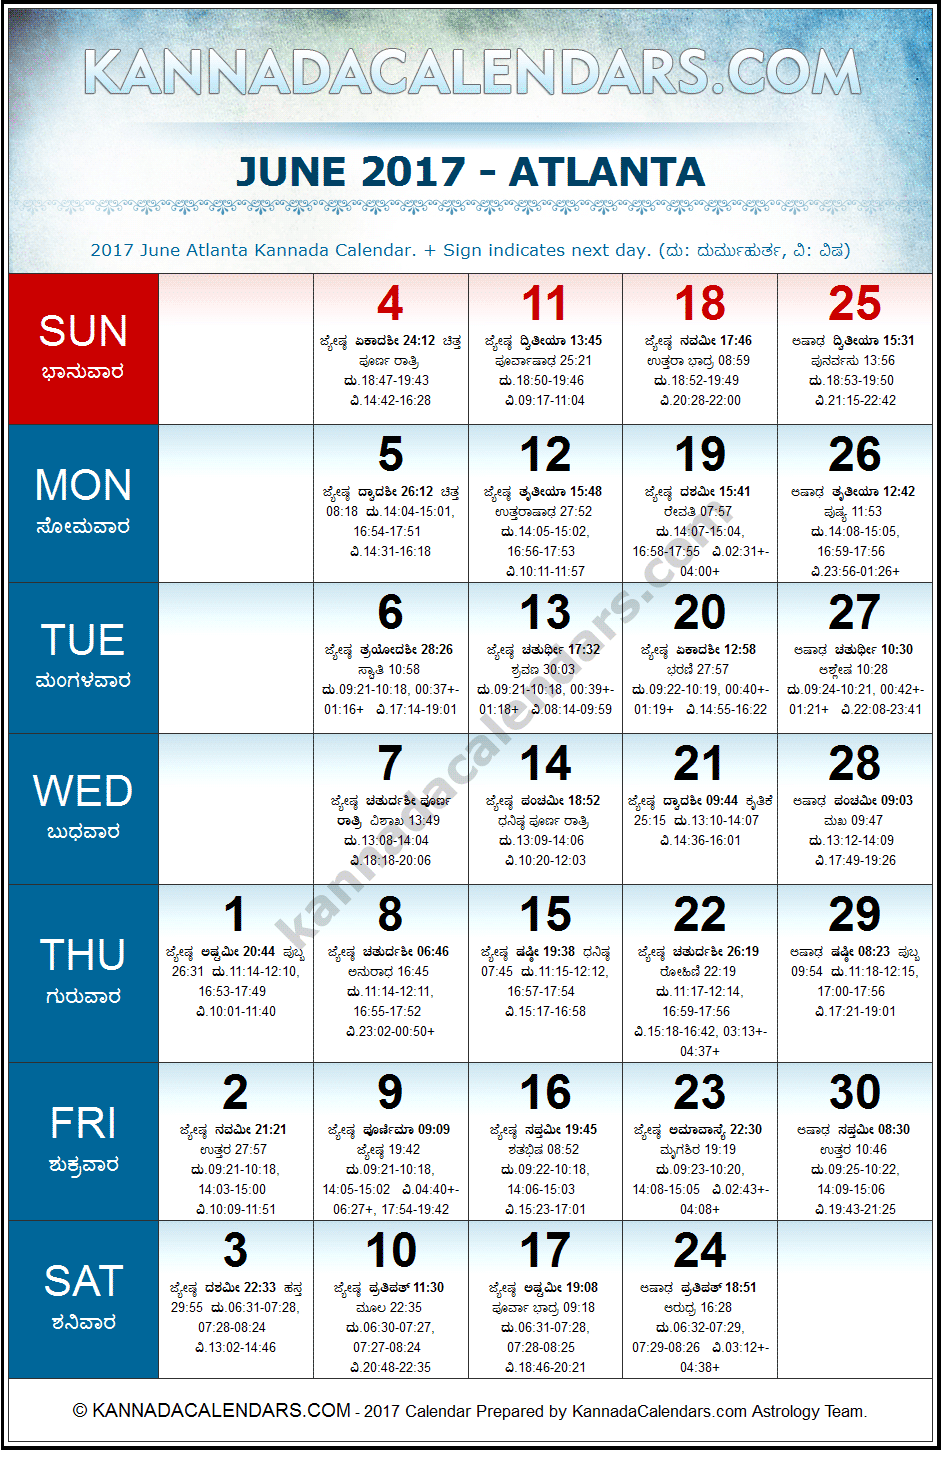 June 2017 Kannada Calendar for Atlanta, USA